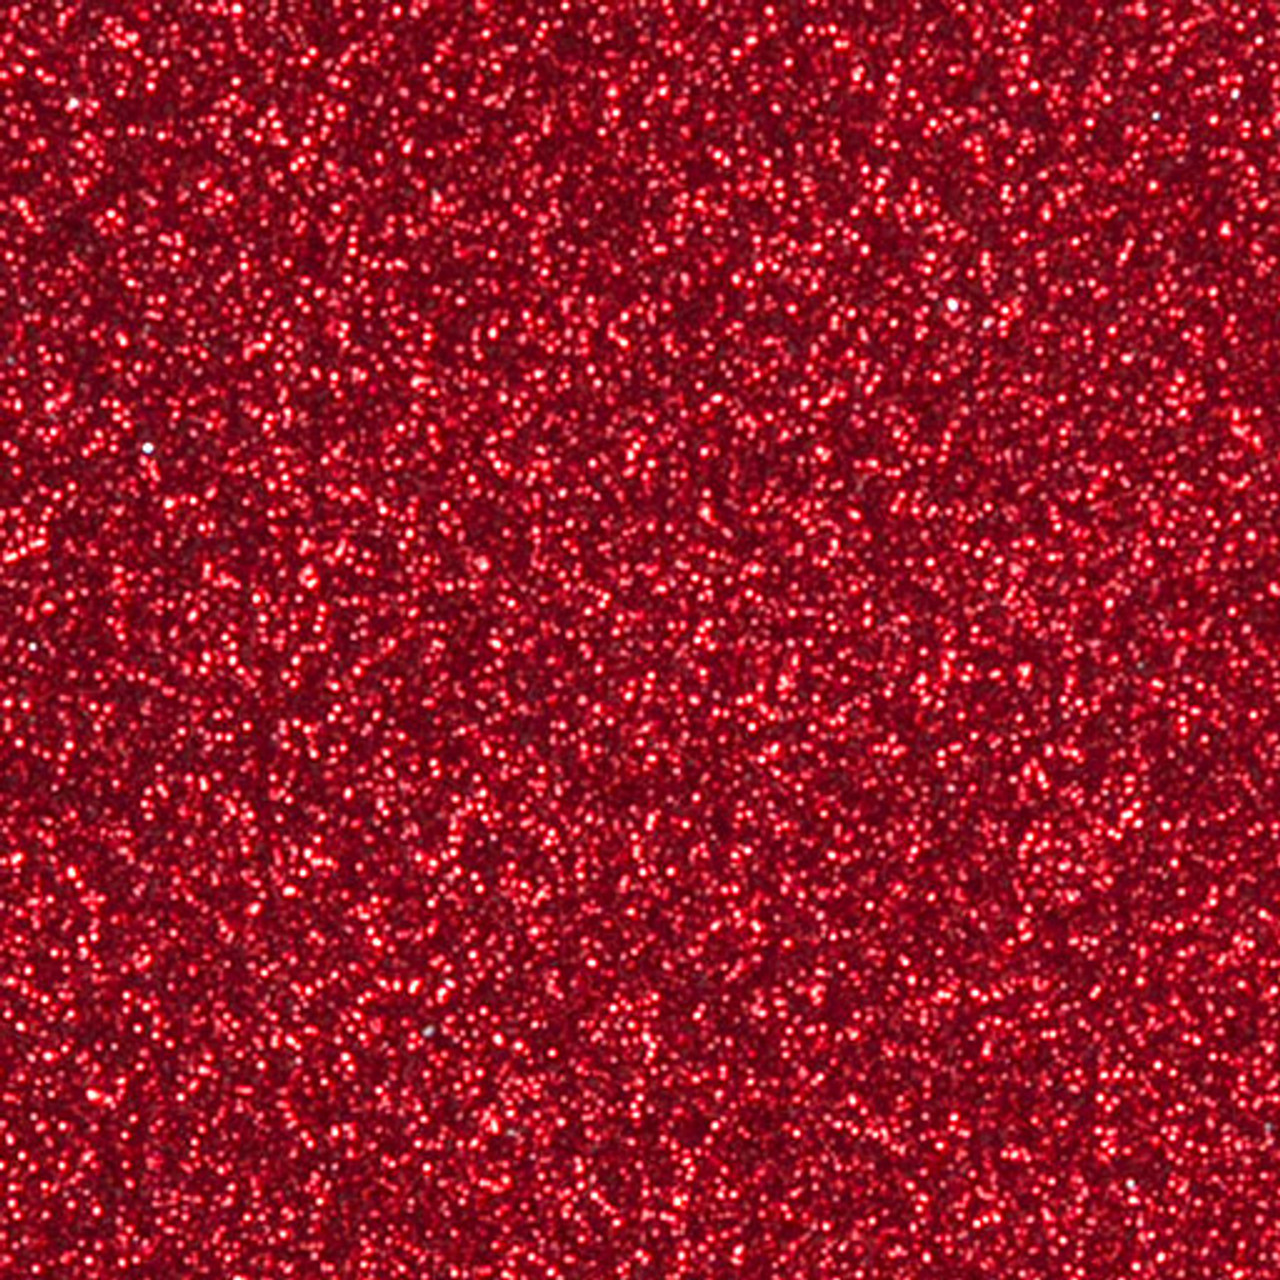 12 x 20 Red Glitter HTV - Heat Transfer Vinyl Sheet Sheets